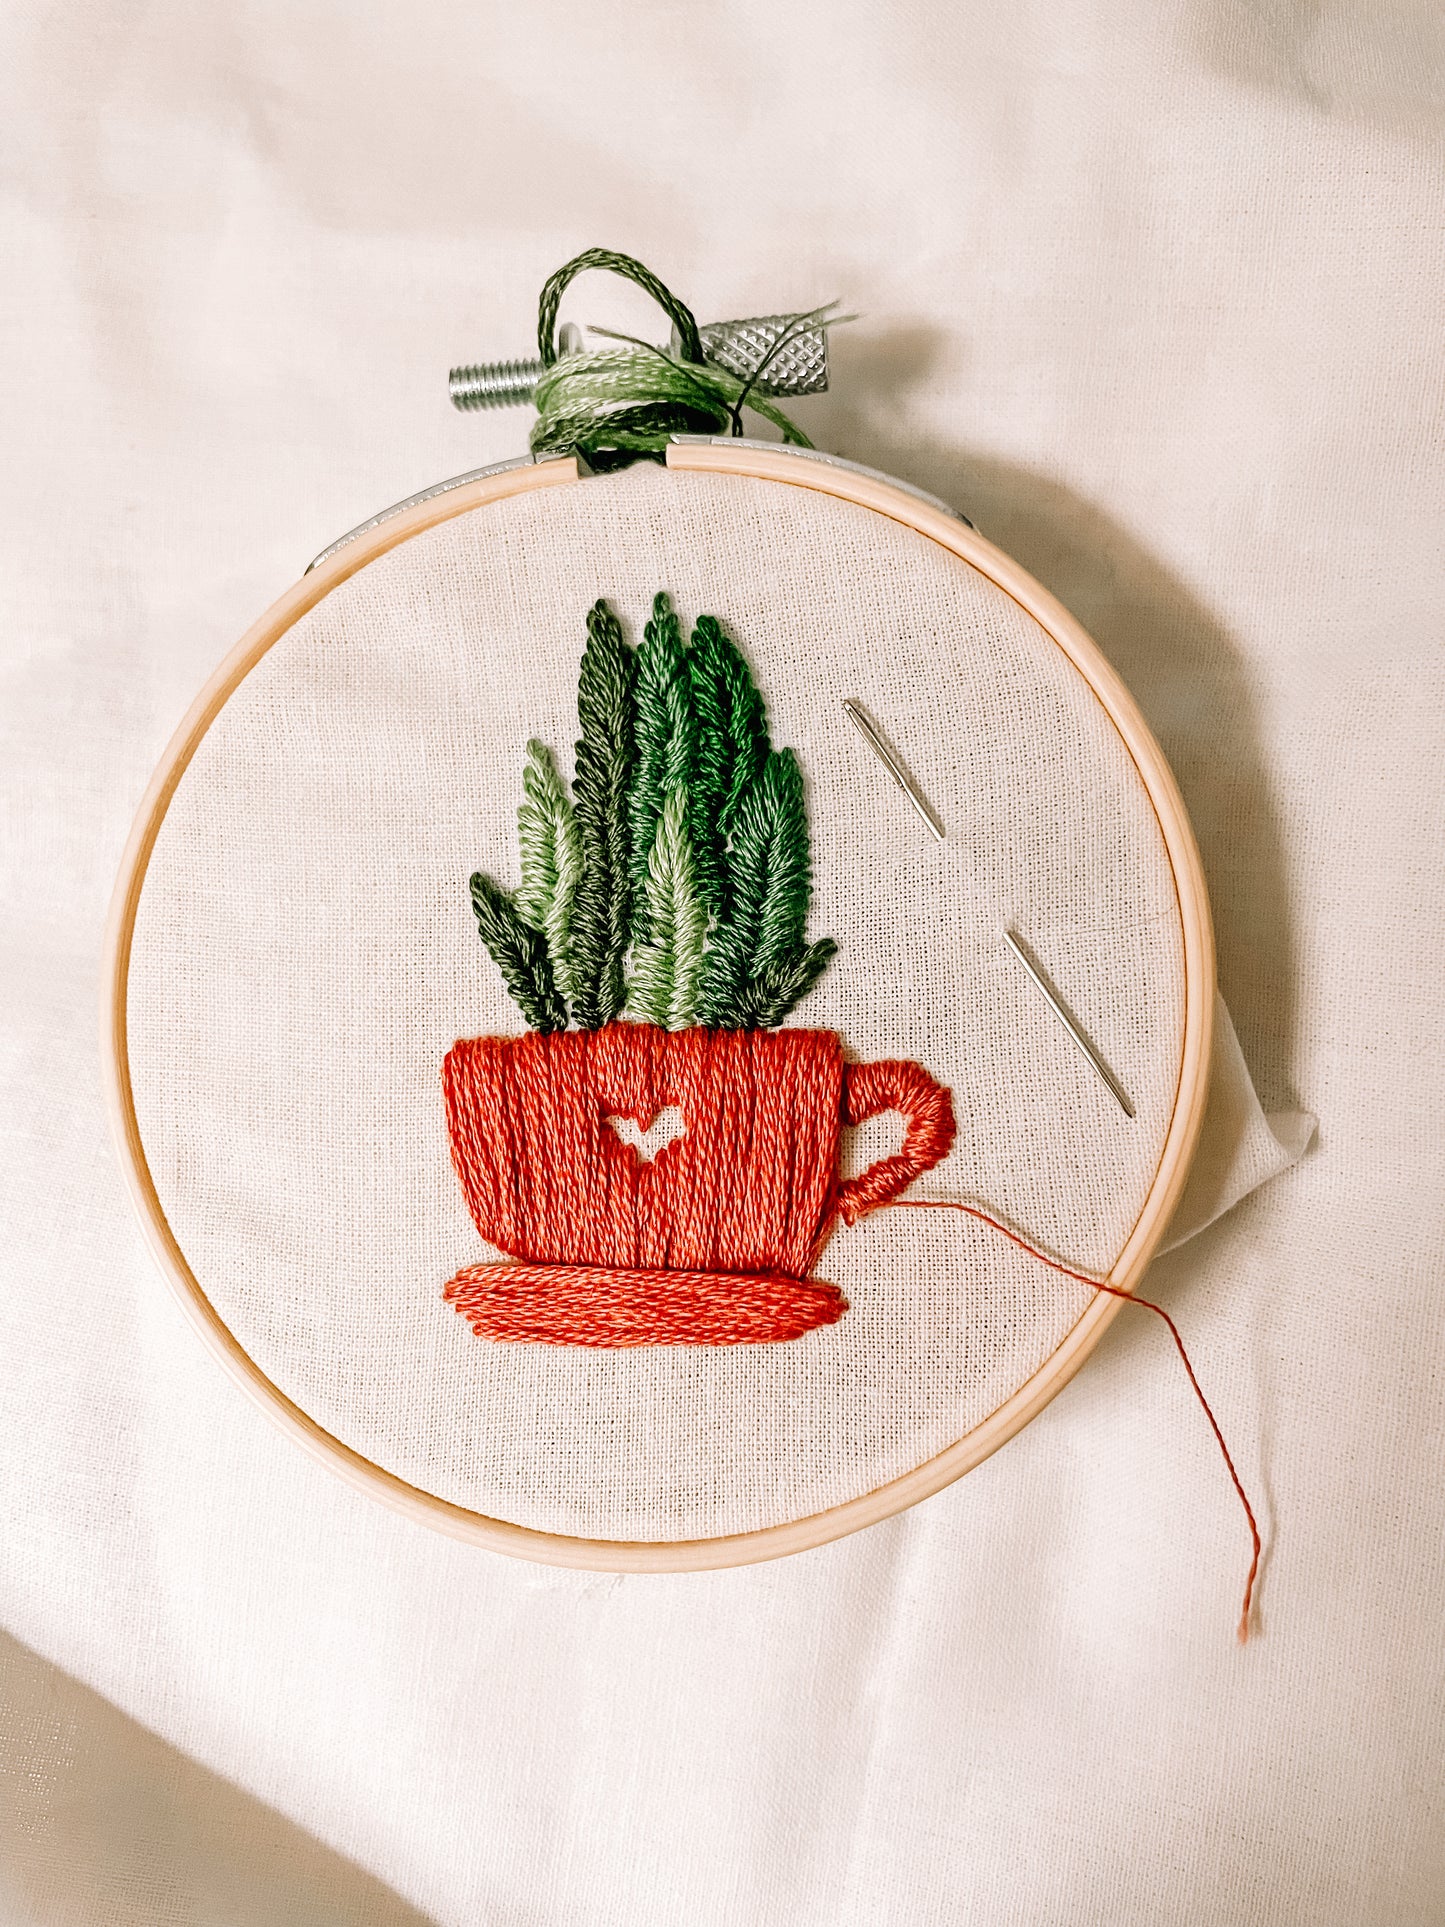 Mini Embroidery Kit